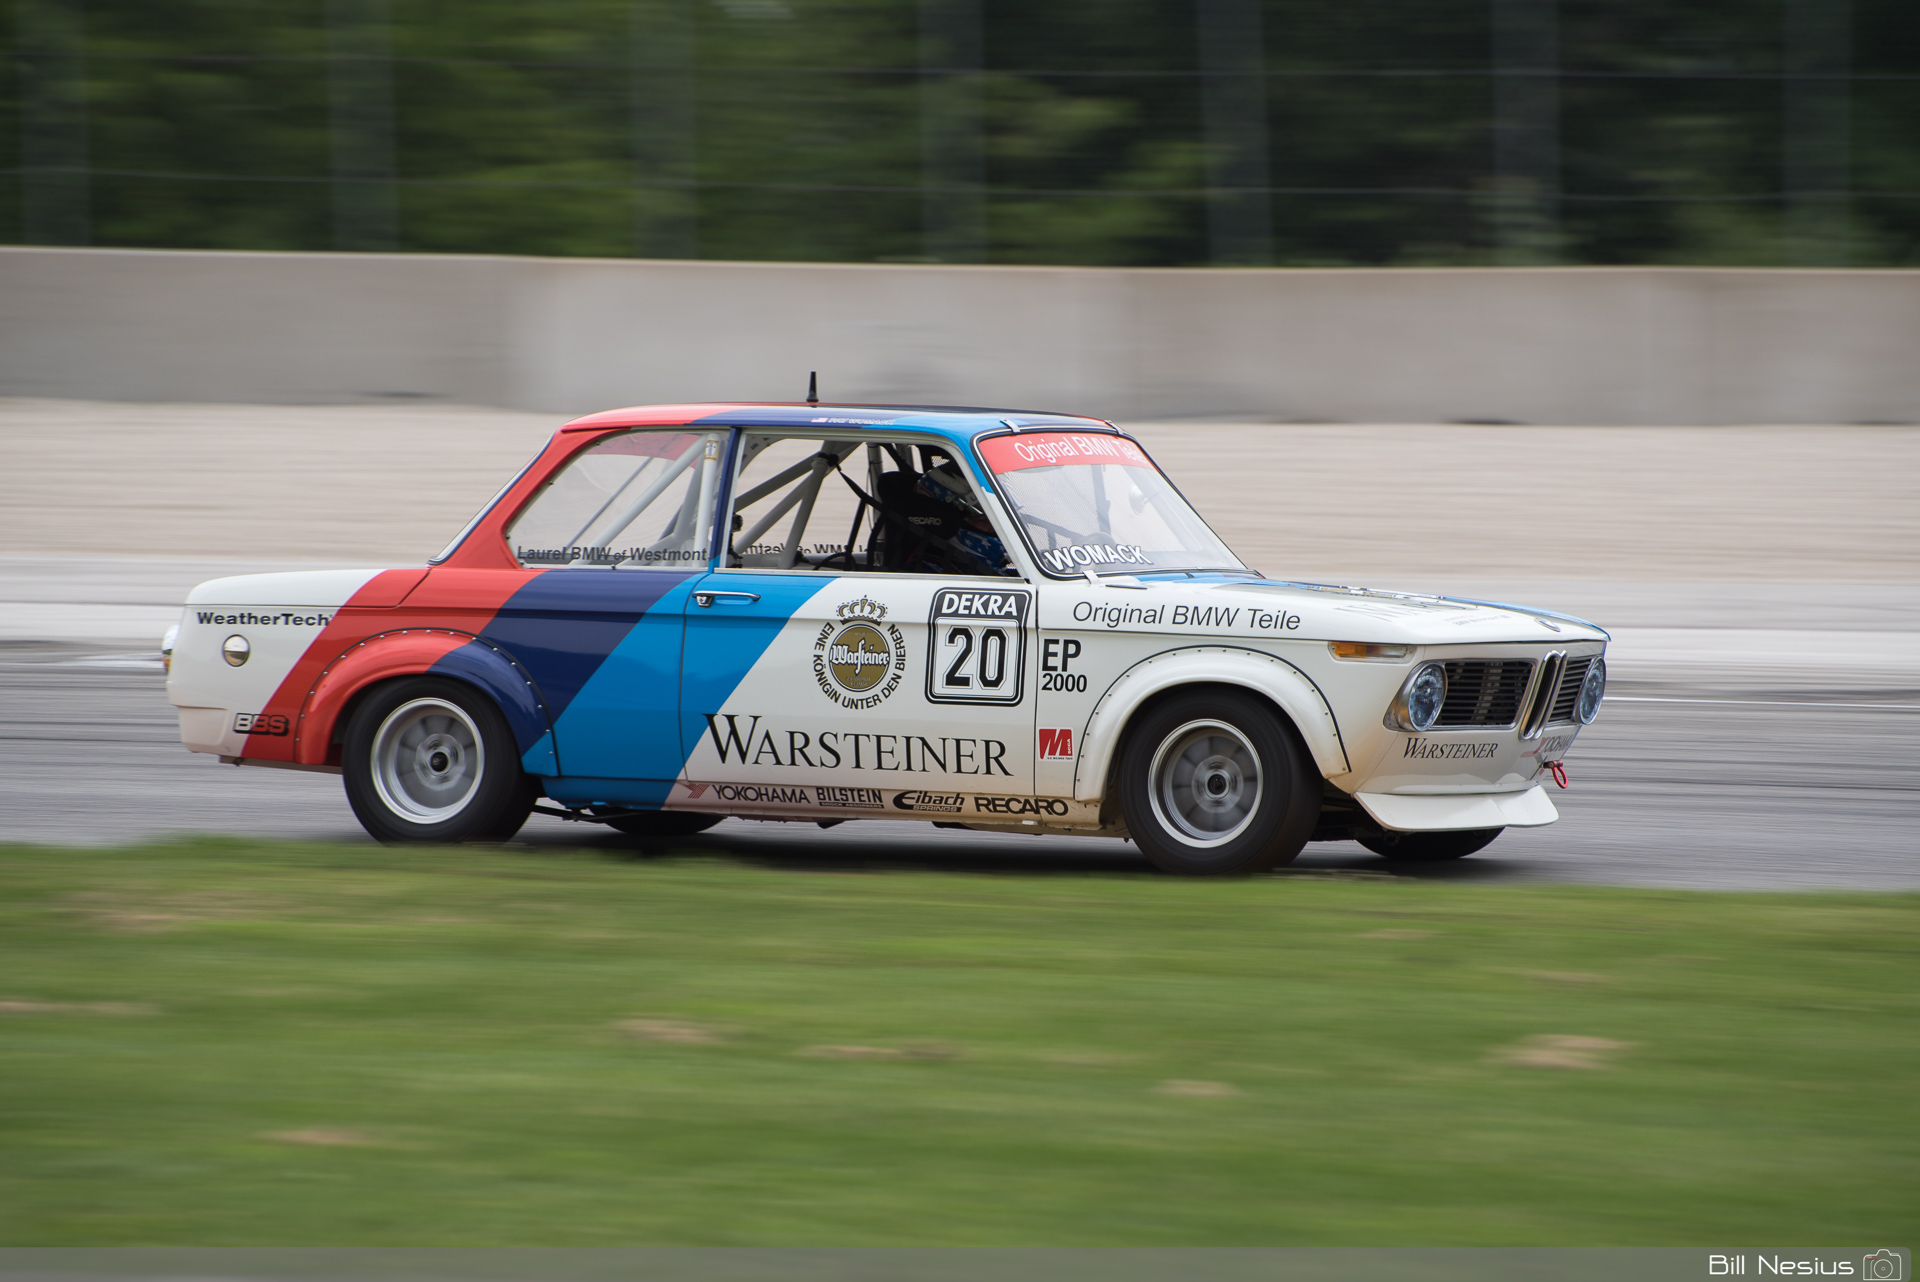 1973 BMW 2002 #20 in turn 1 driven by PatrickWomack / DSC_5133 / 4